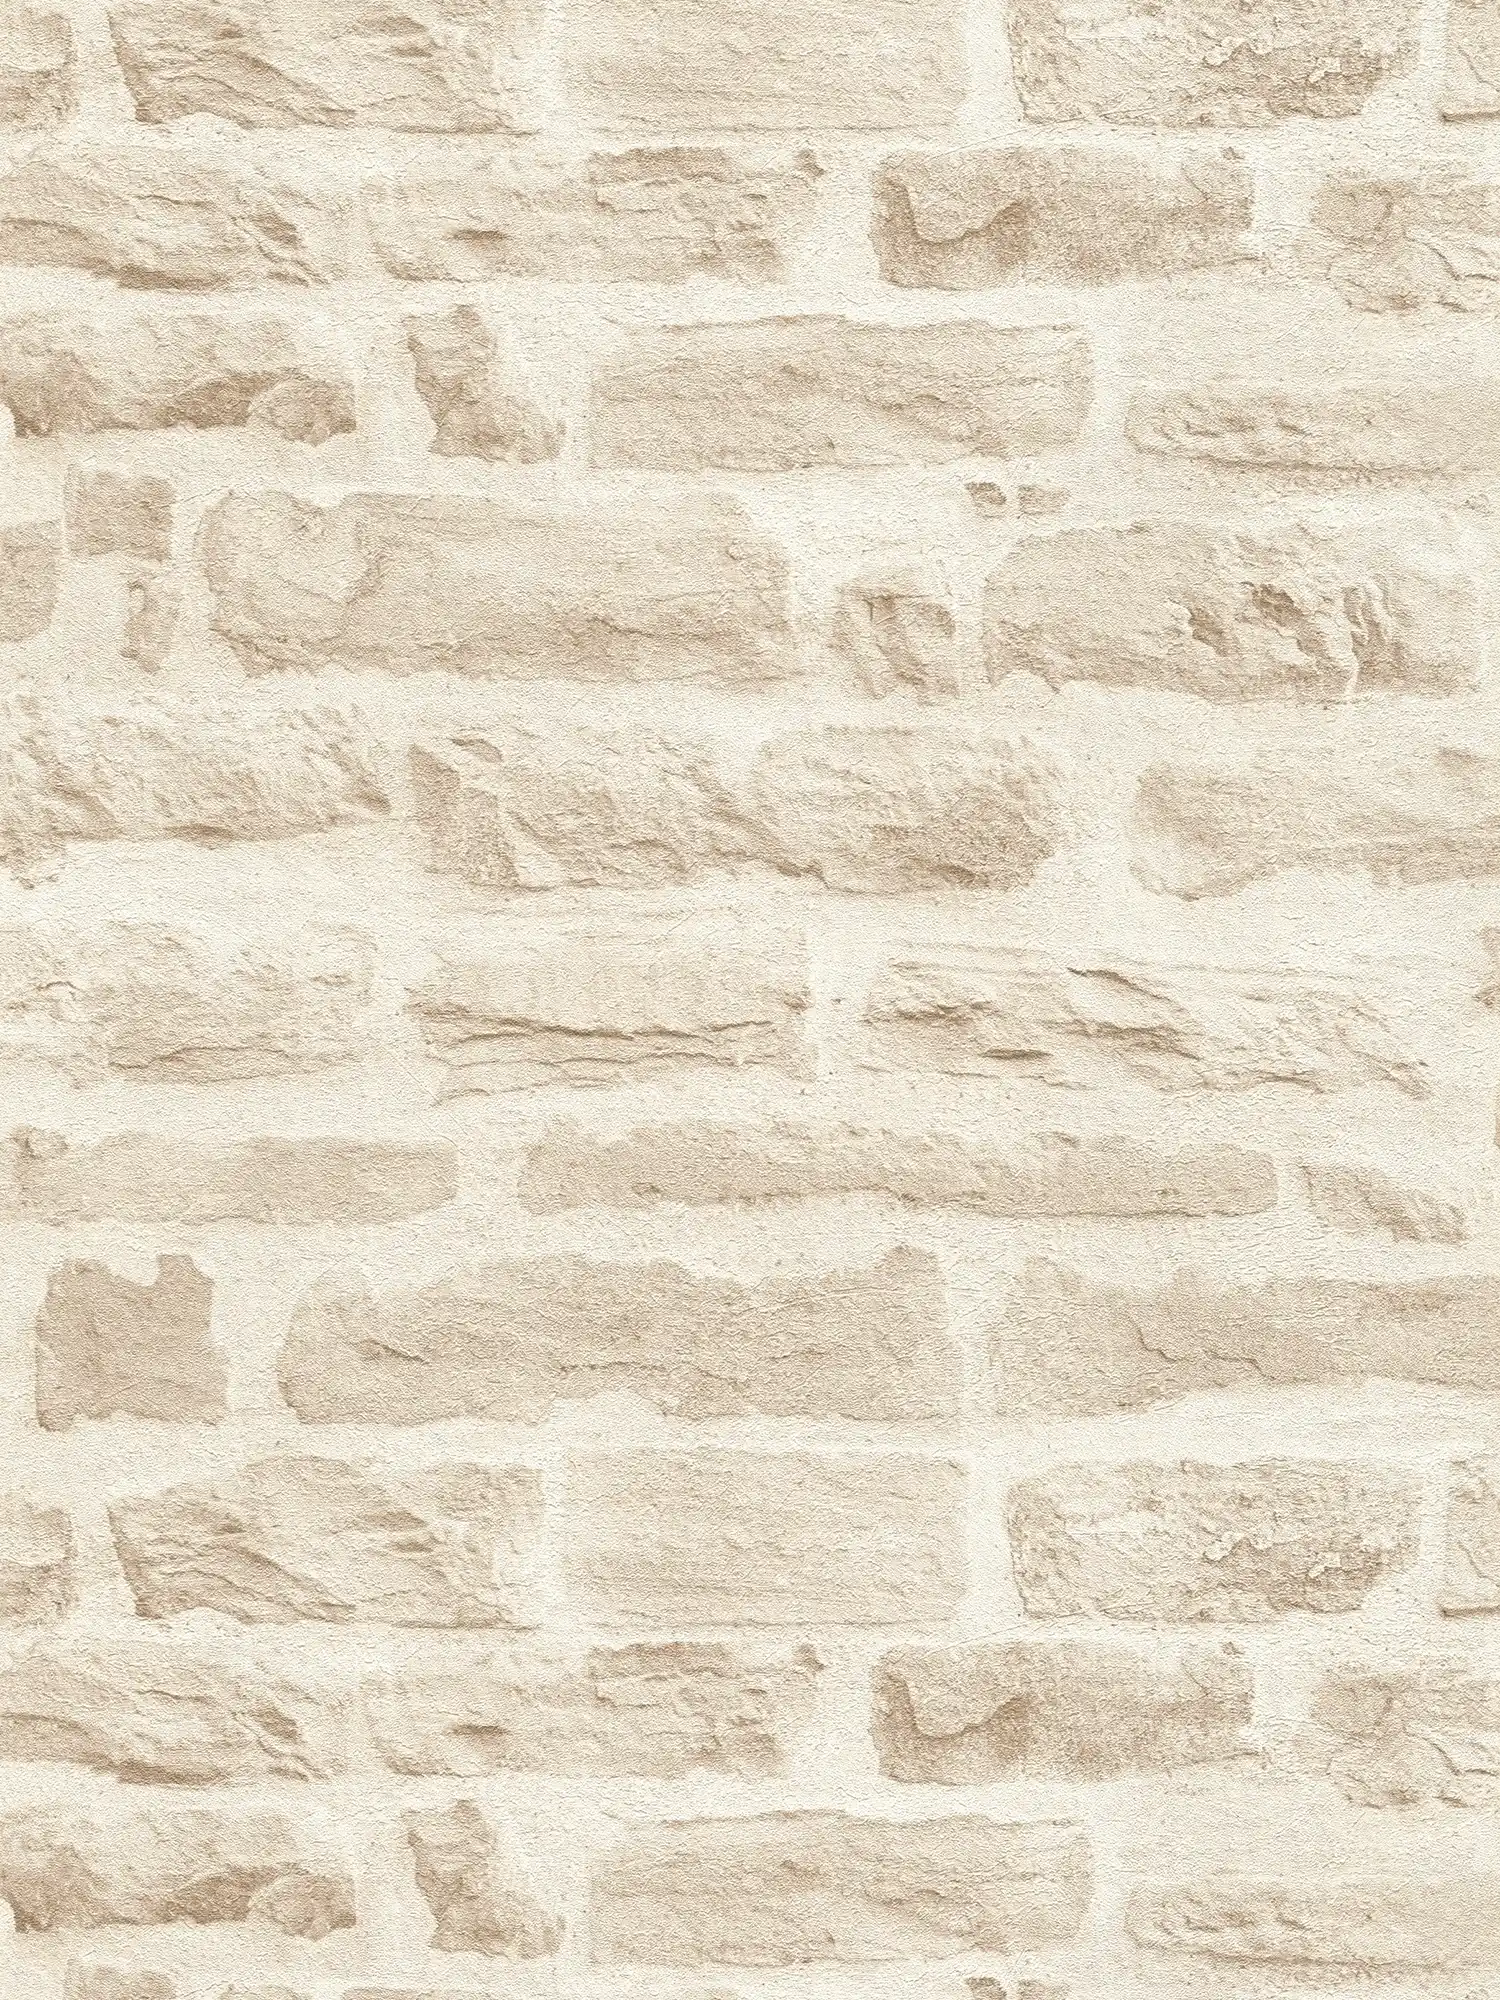         Light non-woven wallpaper natural stone with wall design - beige, cream
    